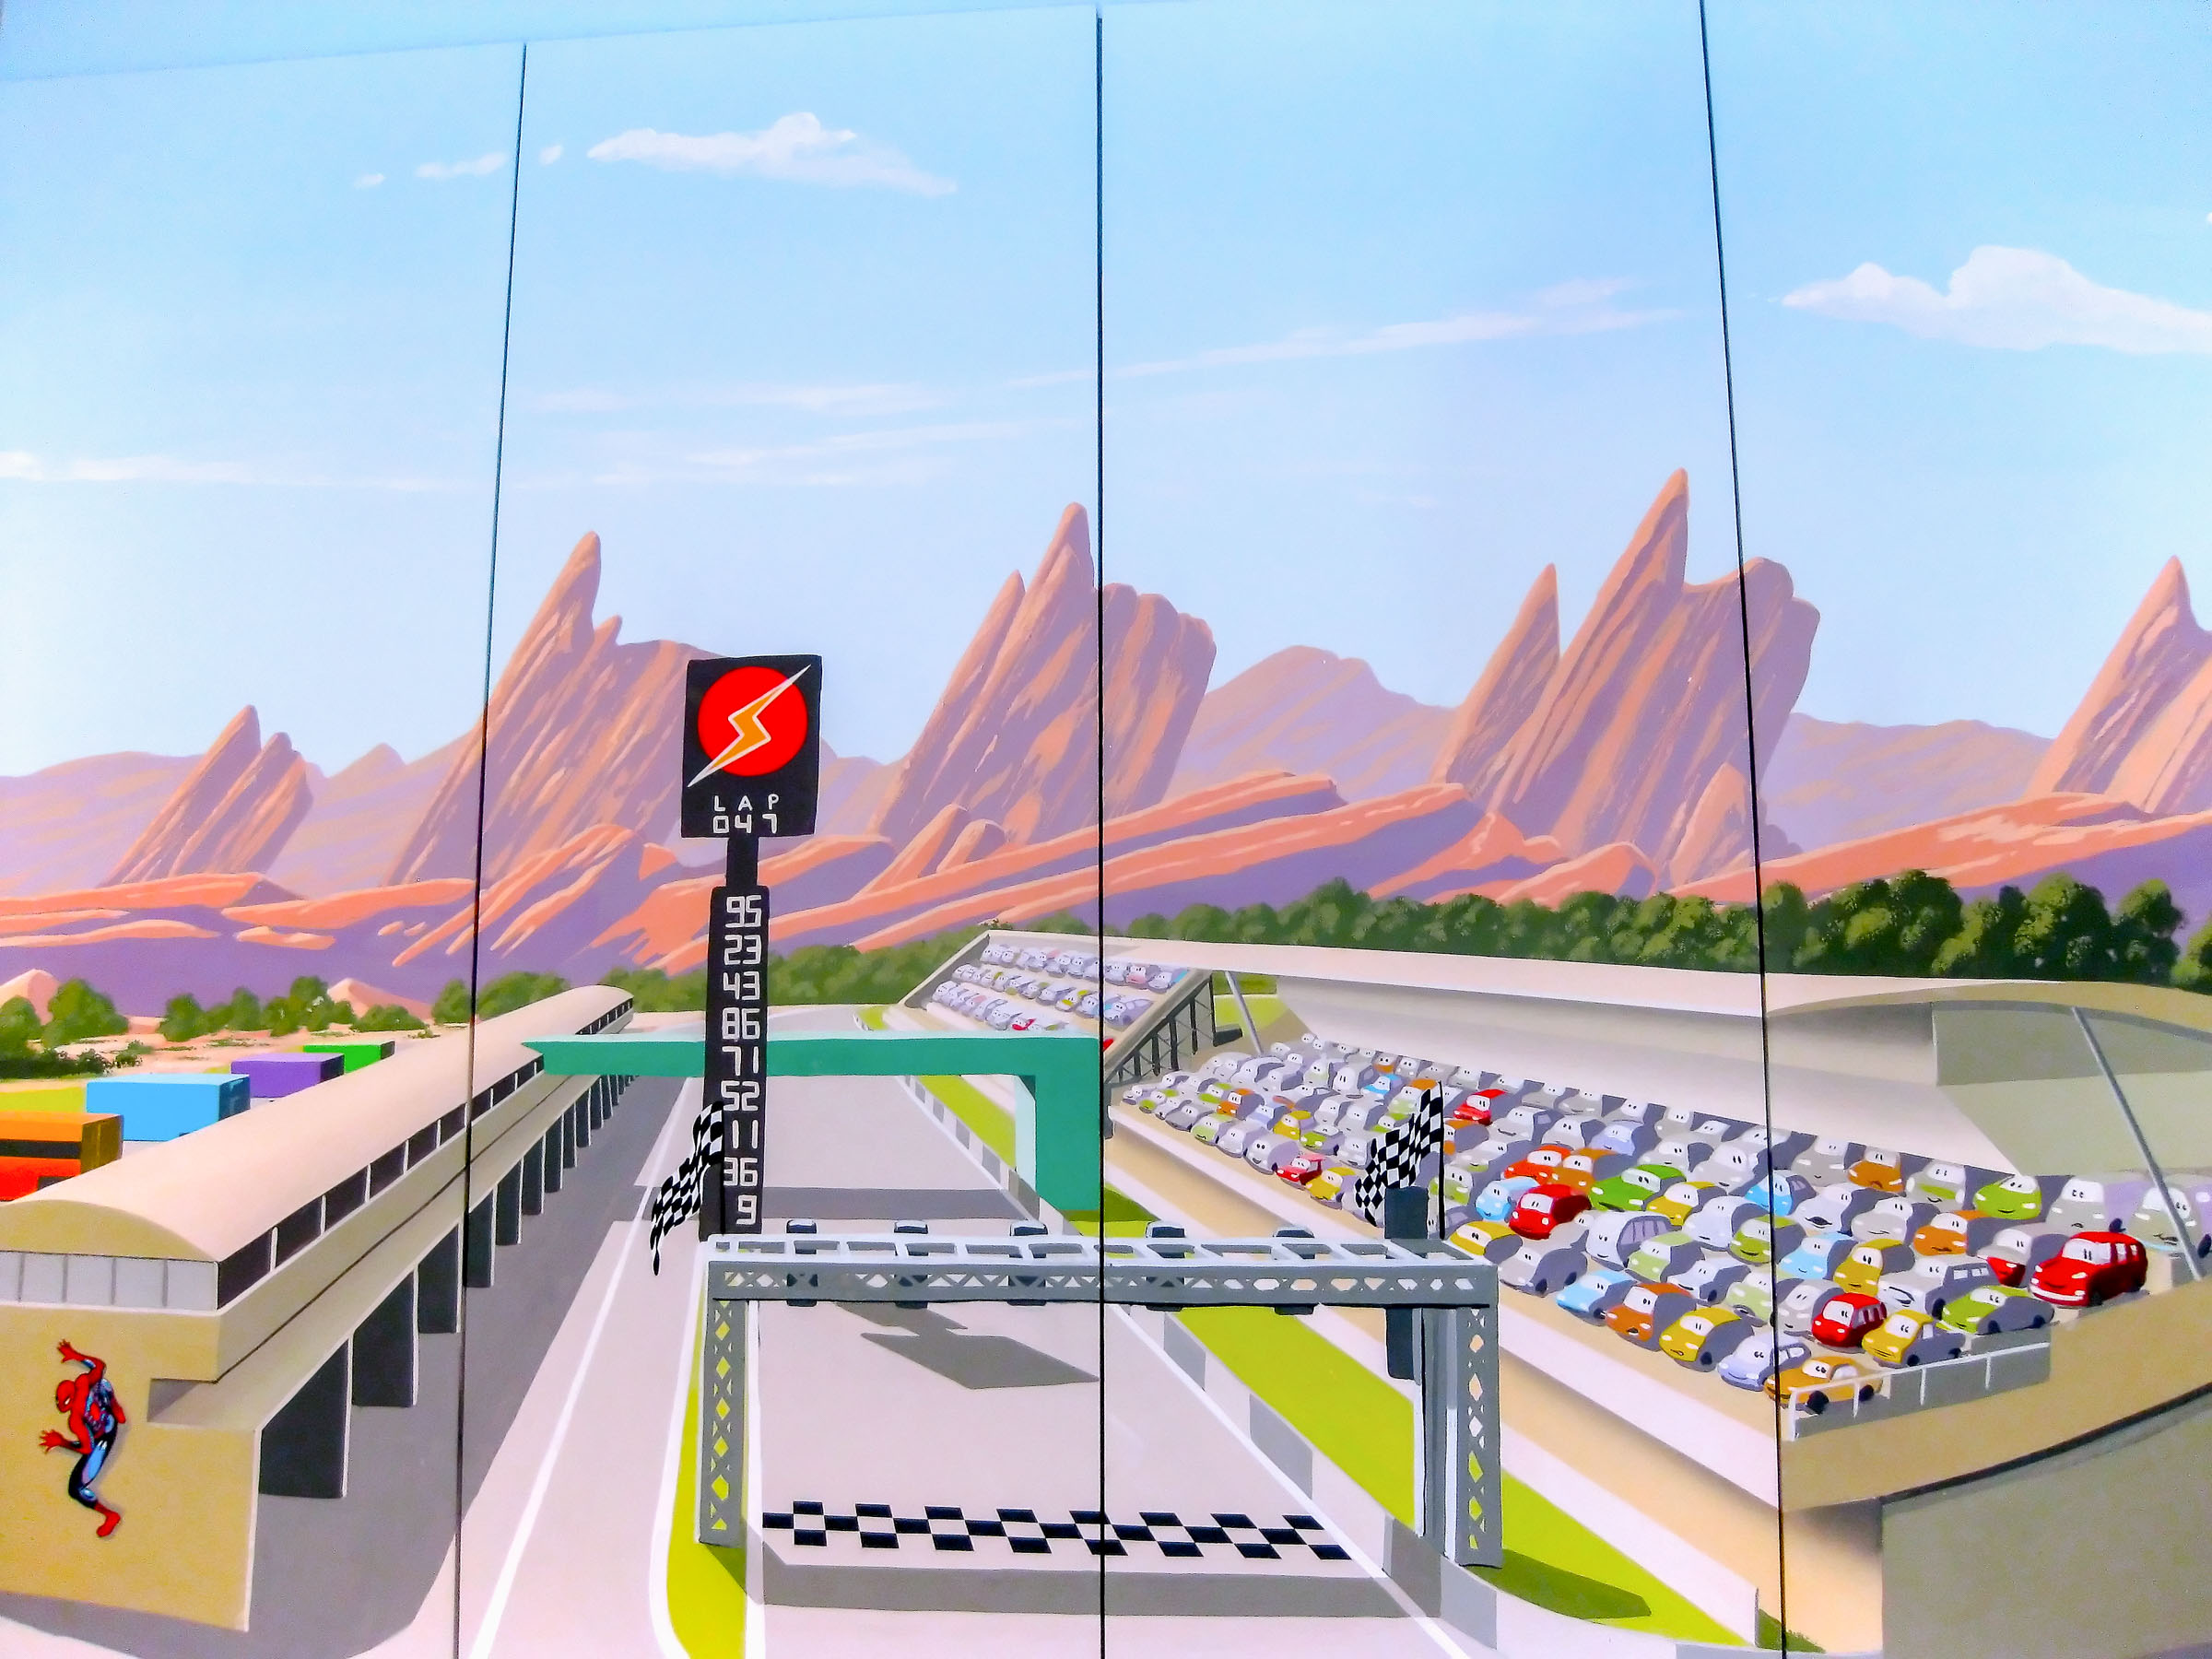 Radiator Springs Hills from Pixars Cars, kids mural